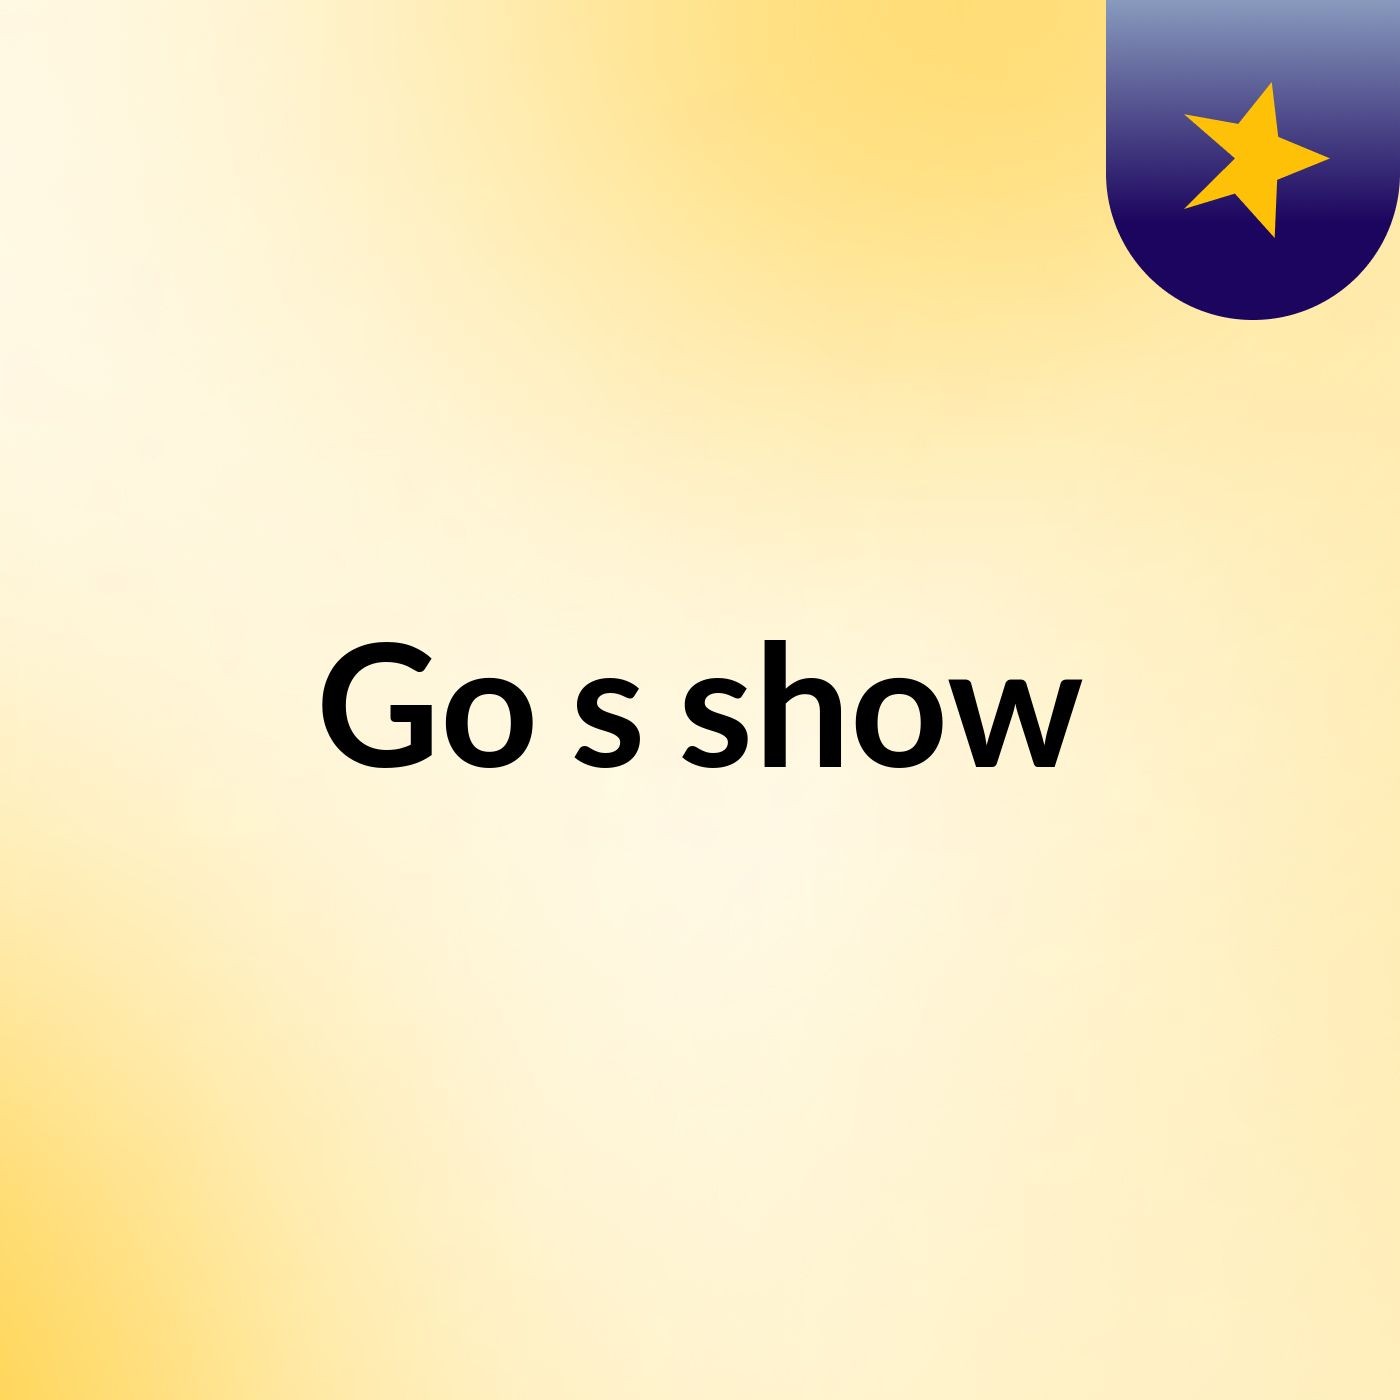 Go's show